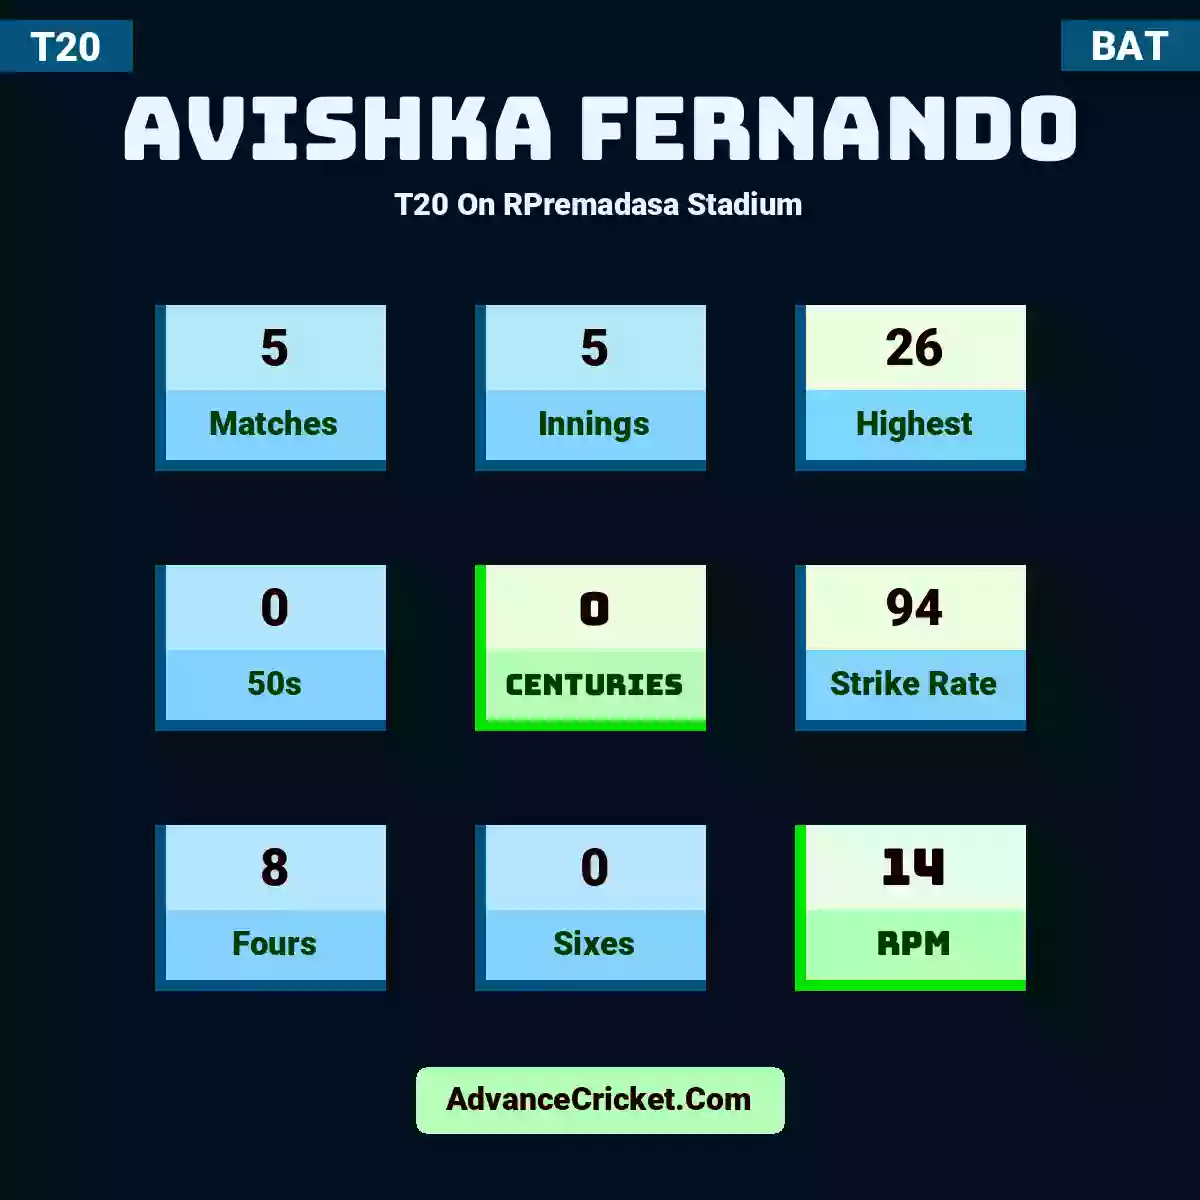 Avishka Fernando T20  On RPremadasa Stadium, Avishka Fernando played 5 matches, scored 26 runs as highest, 0 half-centuries, and 0 centuries, with a strike rate of 94. A.Fernando hit 8 fours and 0 sixes, with an RPM of 14.